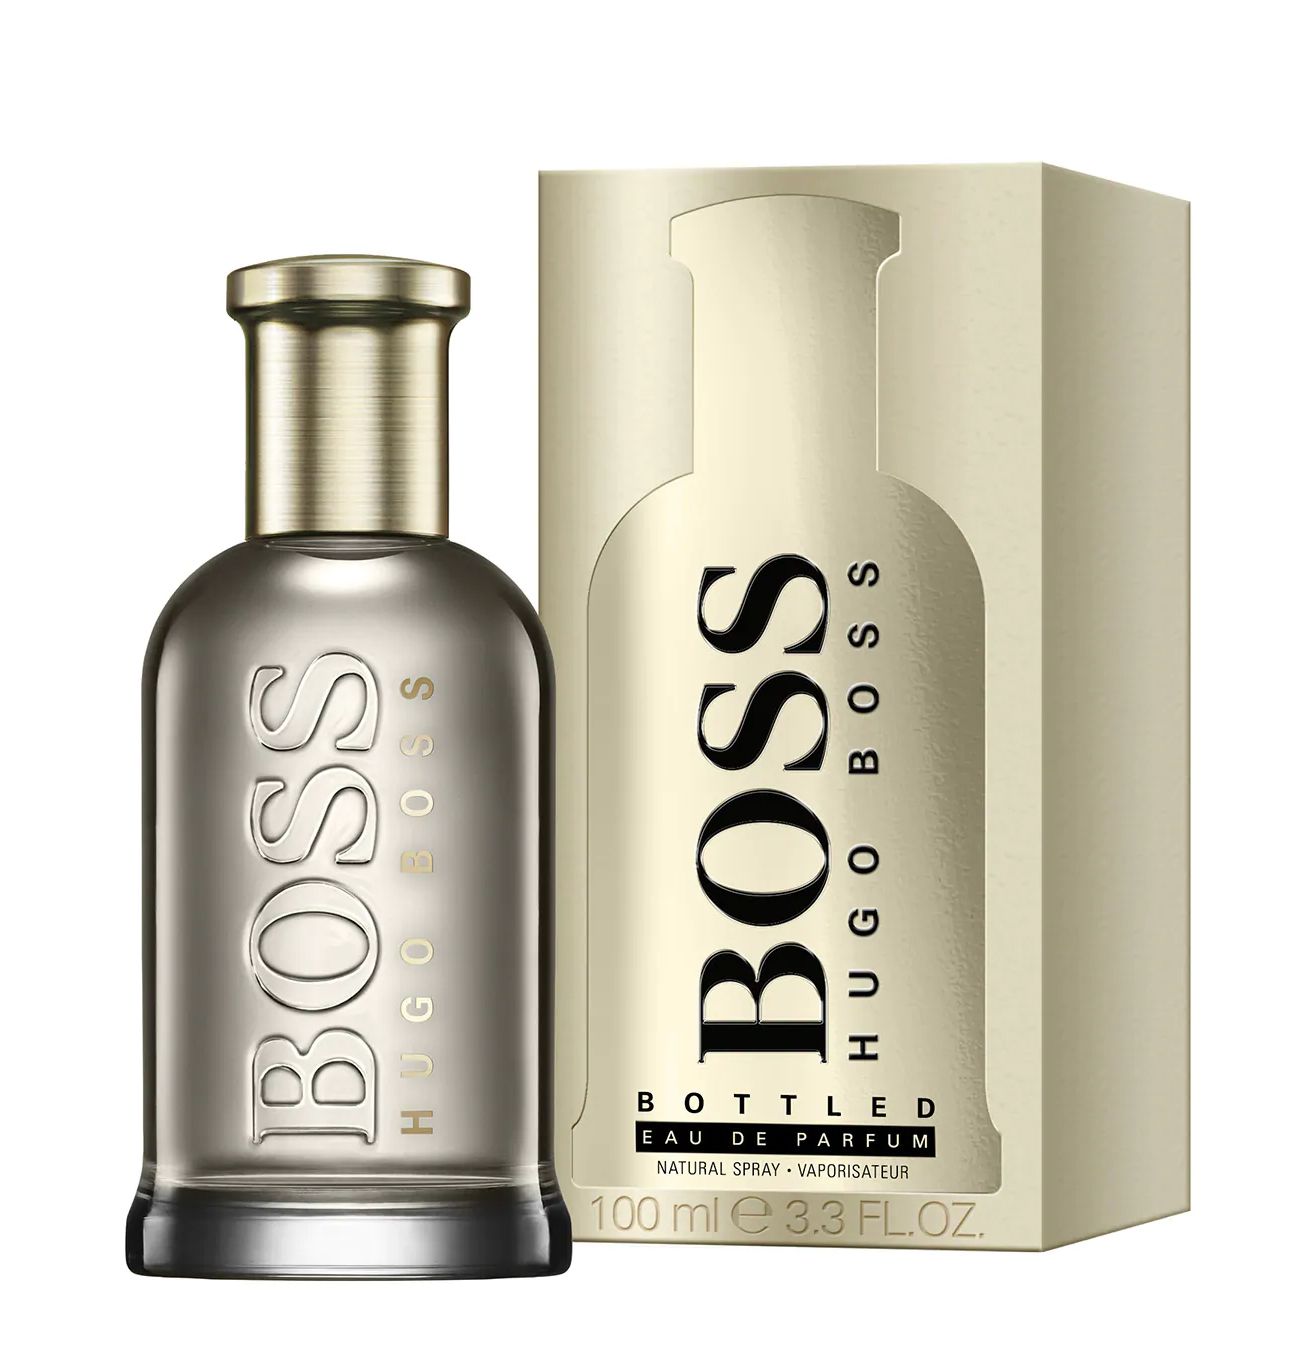 Boss Bottled Eau de Parfum Hugo Boss cologne a new